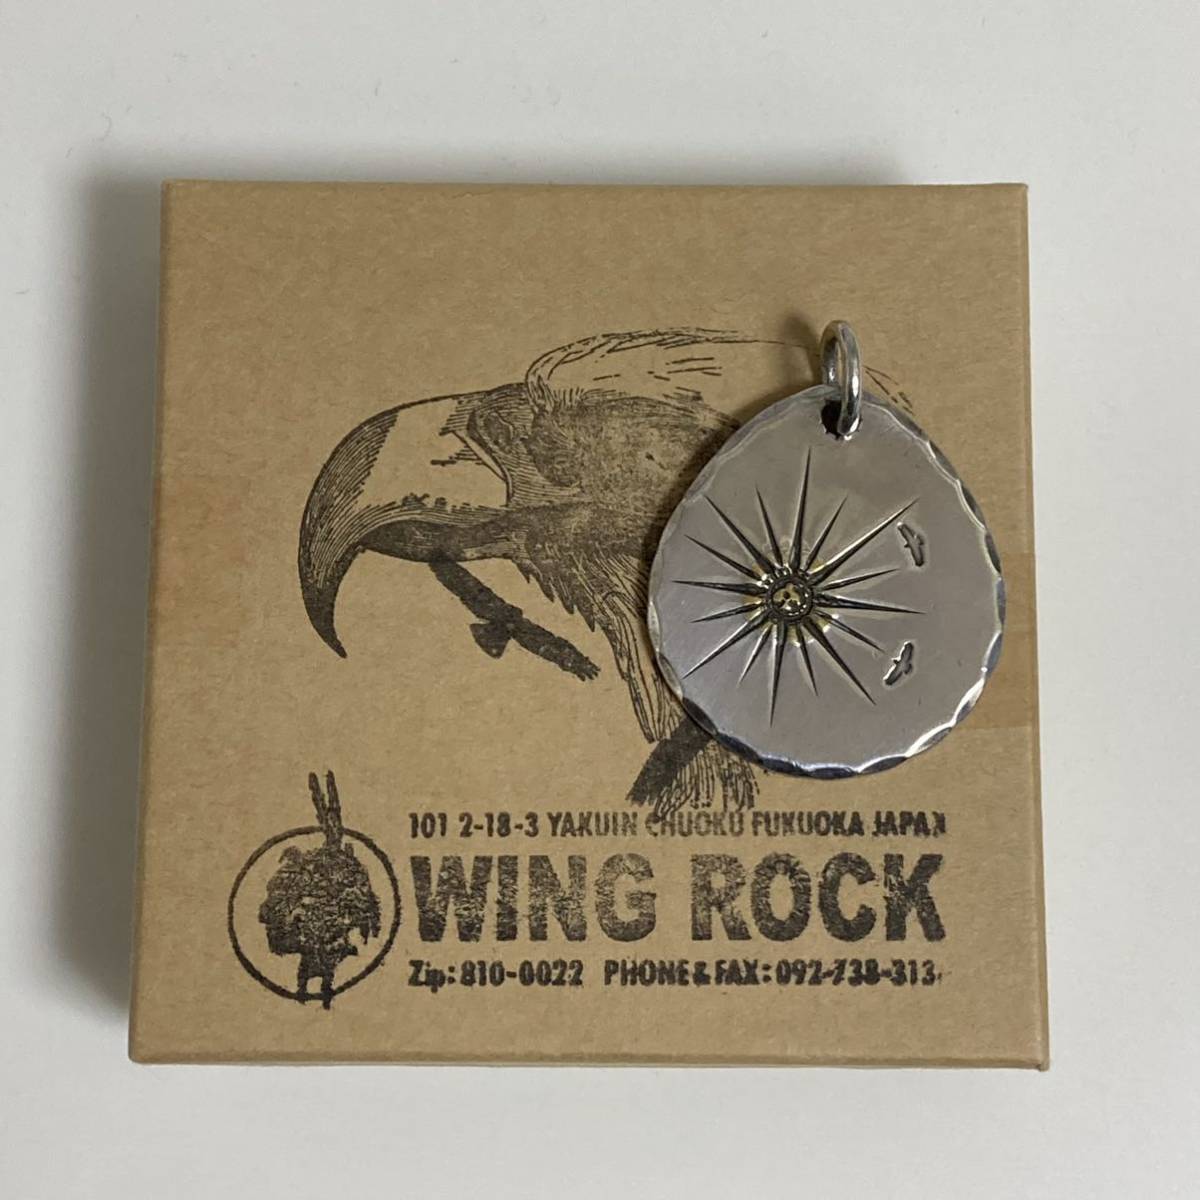 wingrock メタル ウイングロック ウィングロック wing rock - 通販